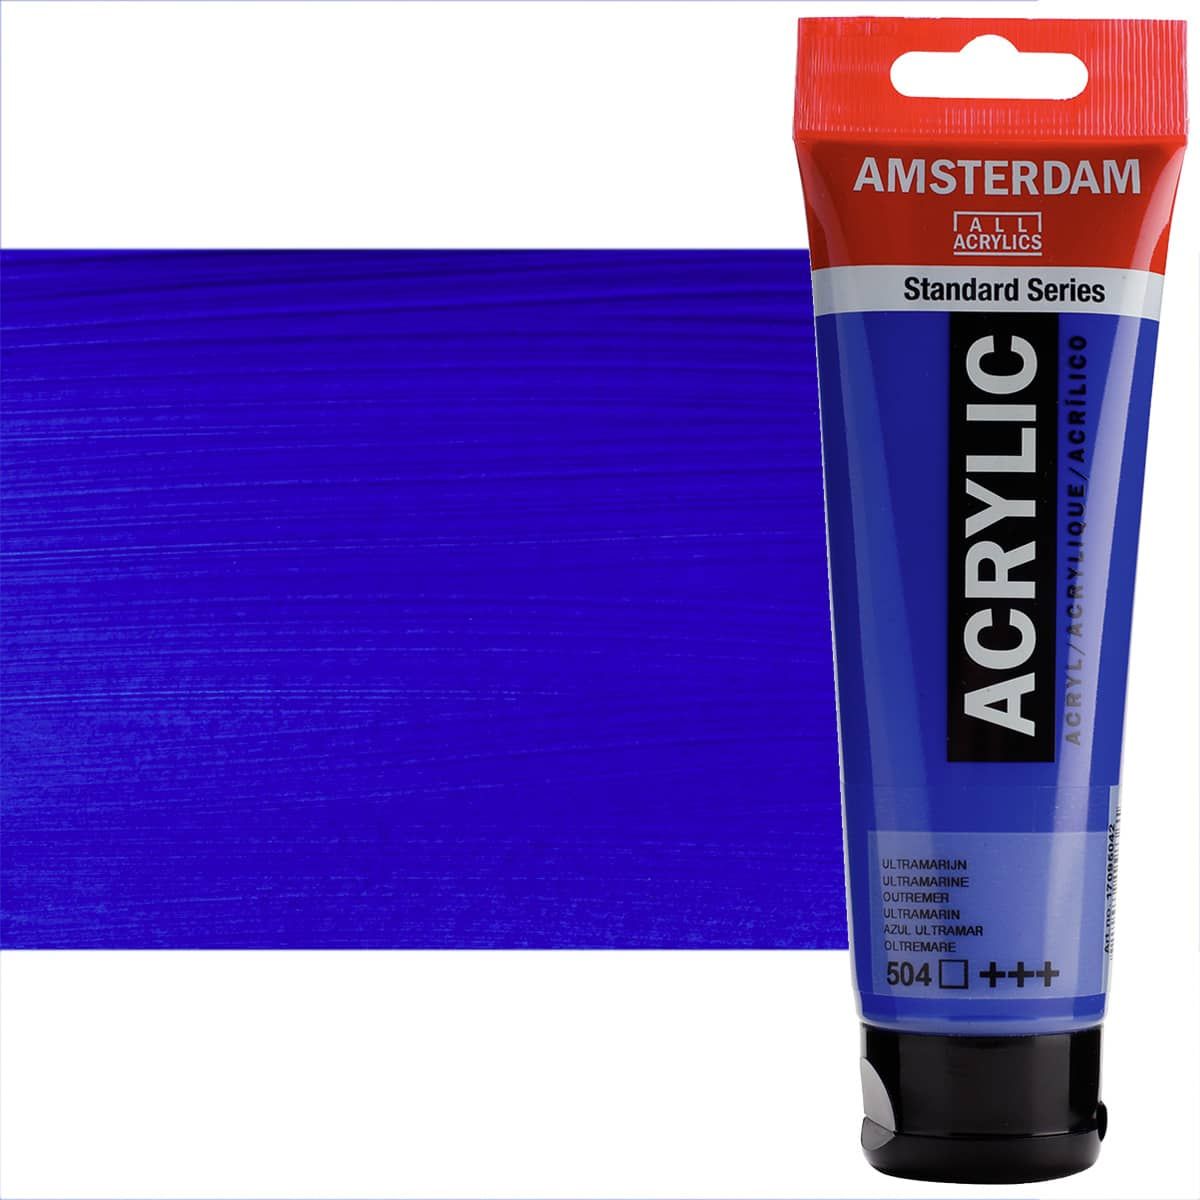 Amsterdam Standard Acrylic Paint 120Ml-Ultramarine Violet